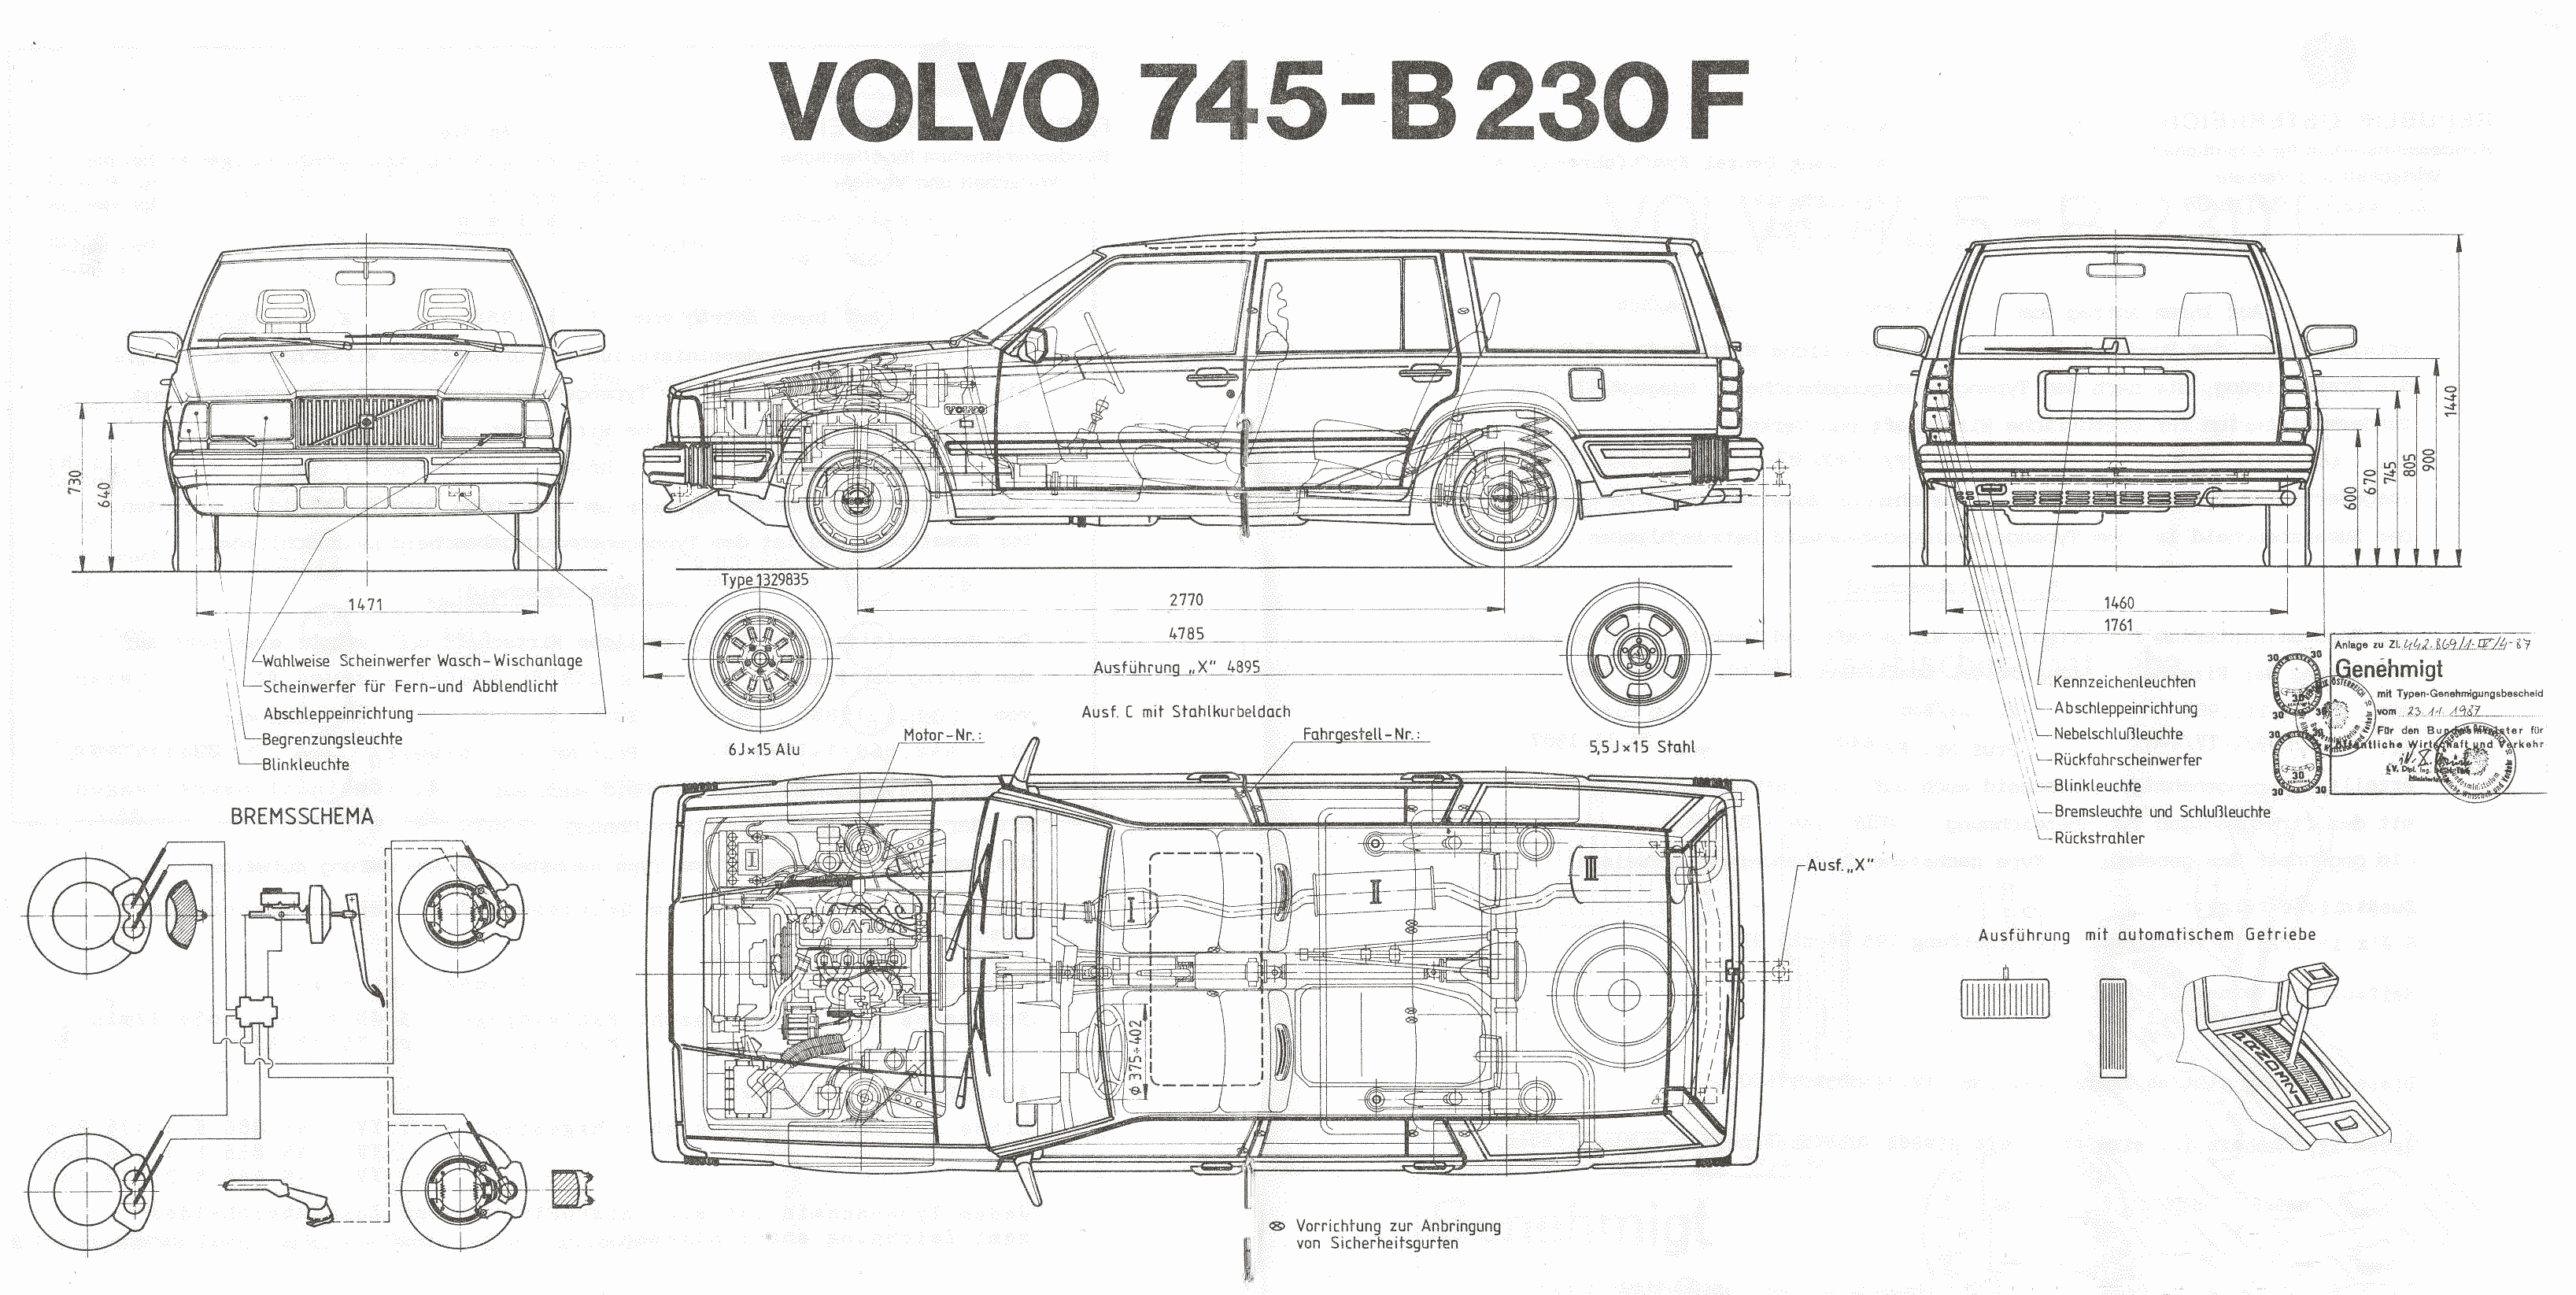 Volvo 745 blueprint